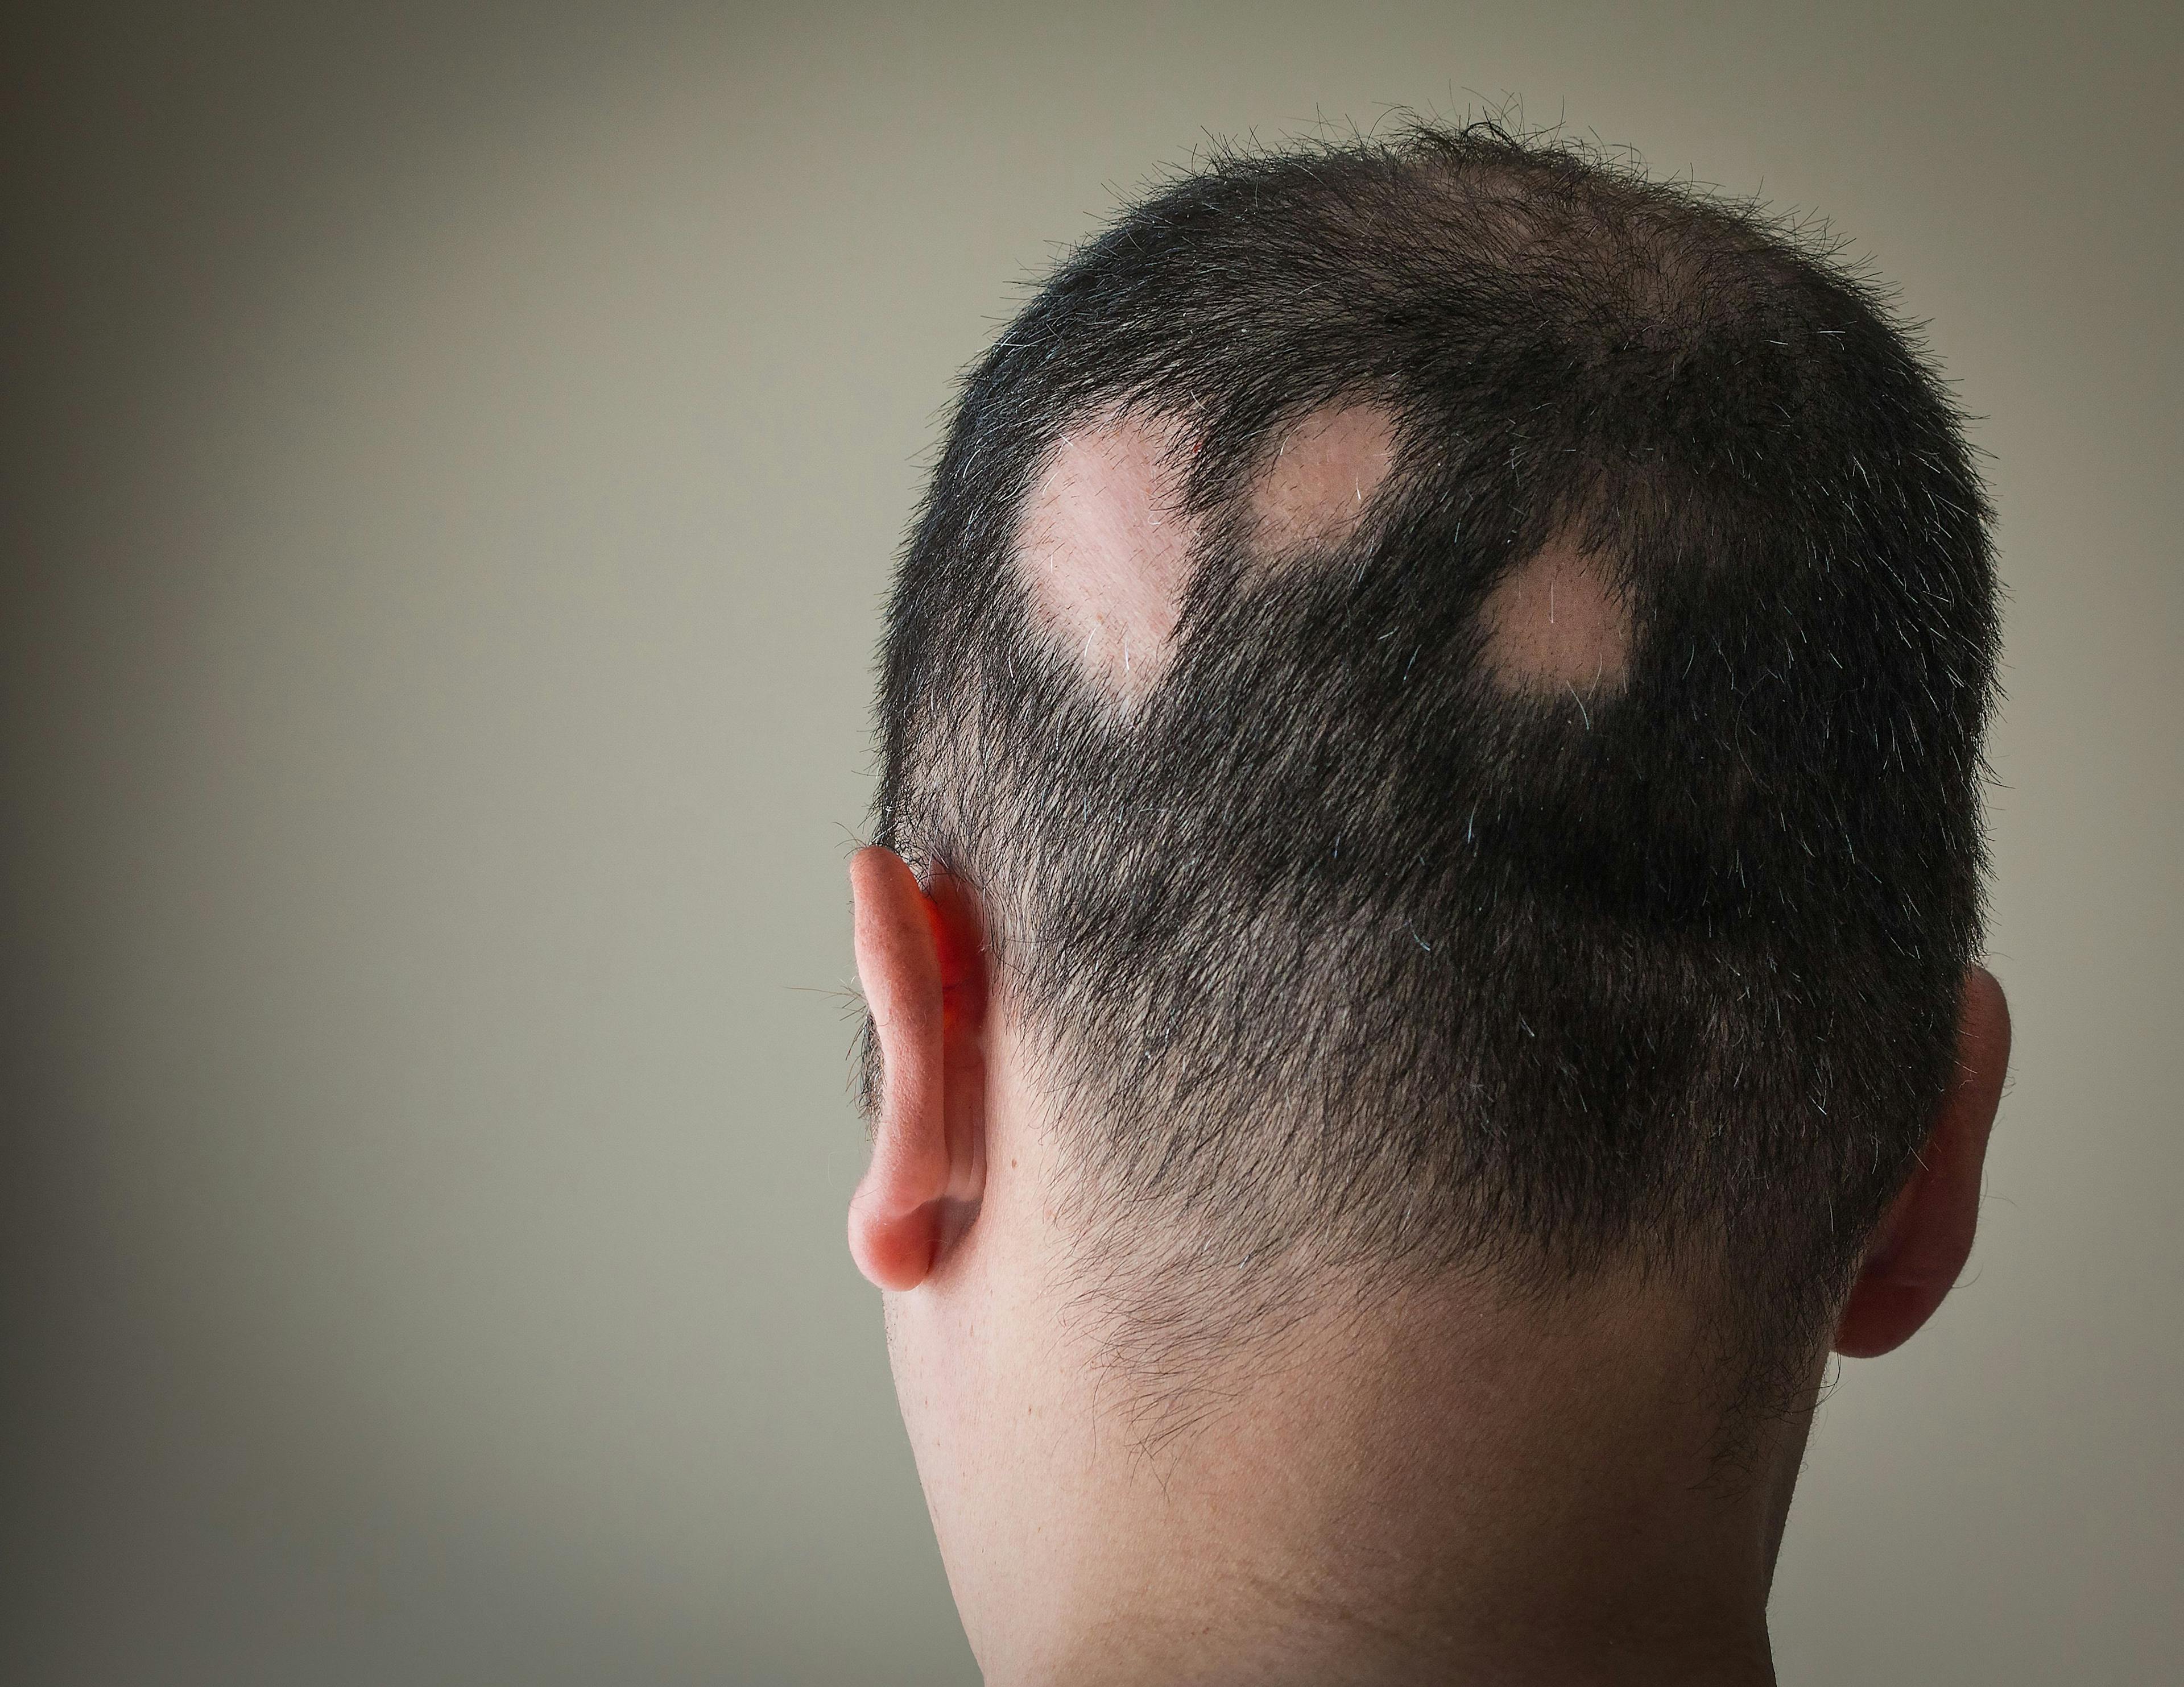 Patient with Alopecia | Image Credit: © Alex Papp - stock.adobe.com